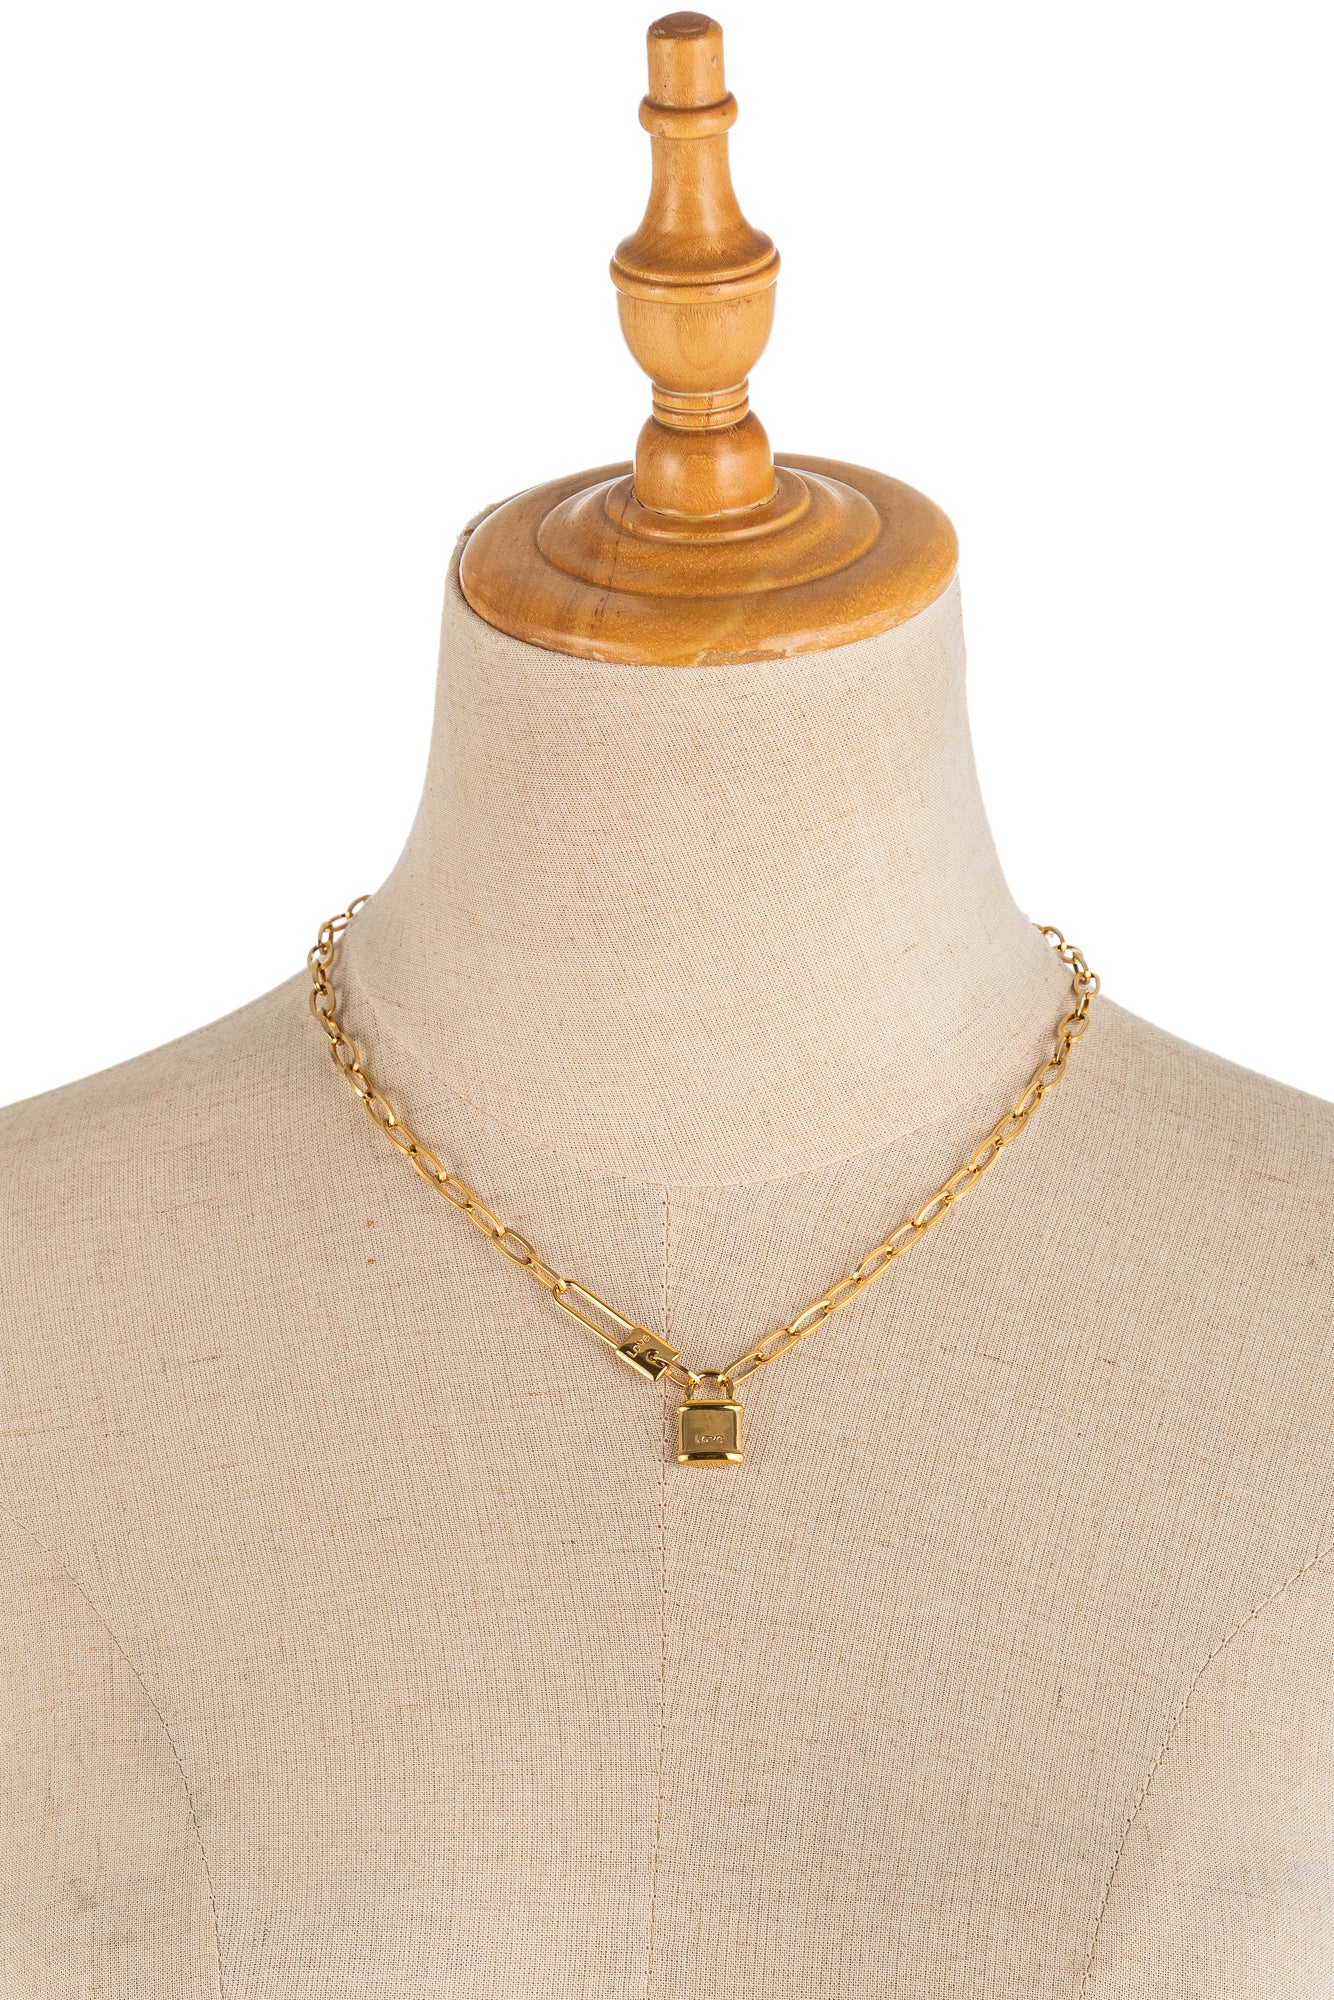 Limited Vintage Edition Padlock  Necklace, Padlock necklace, Fashion  jewelry